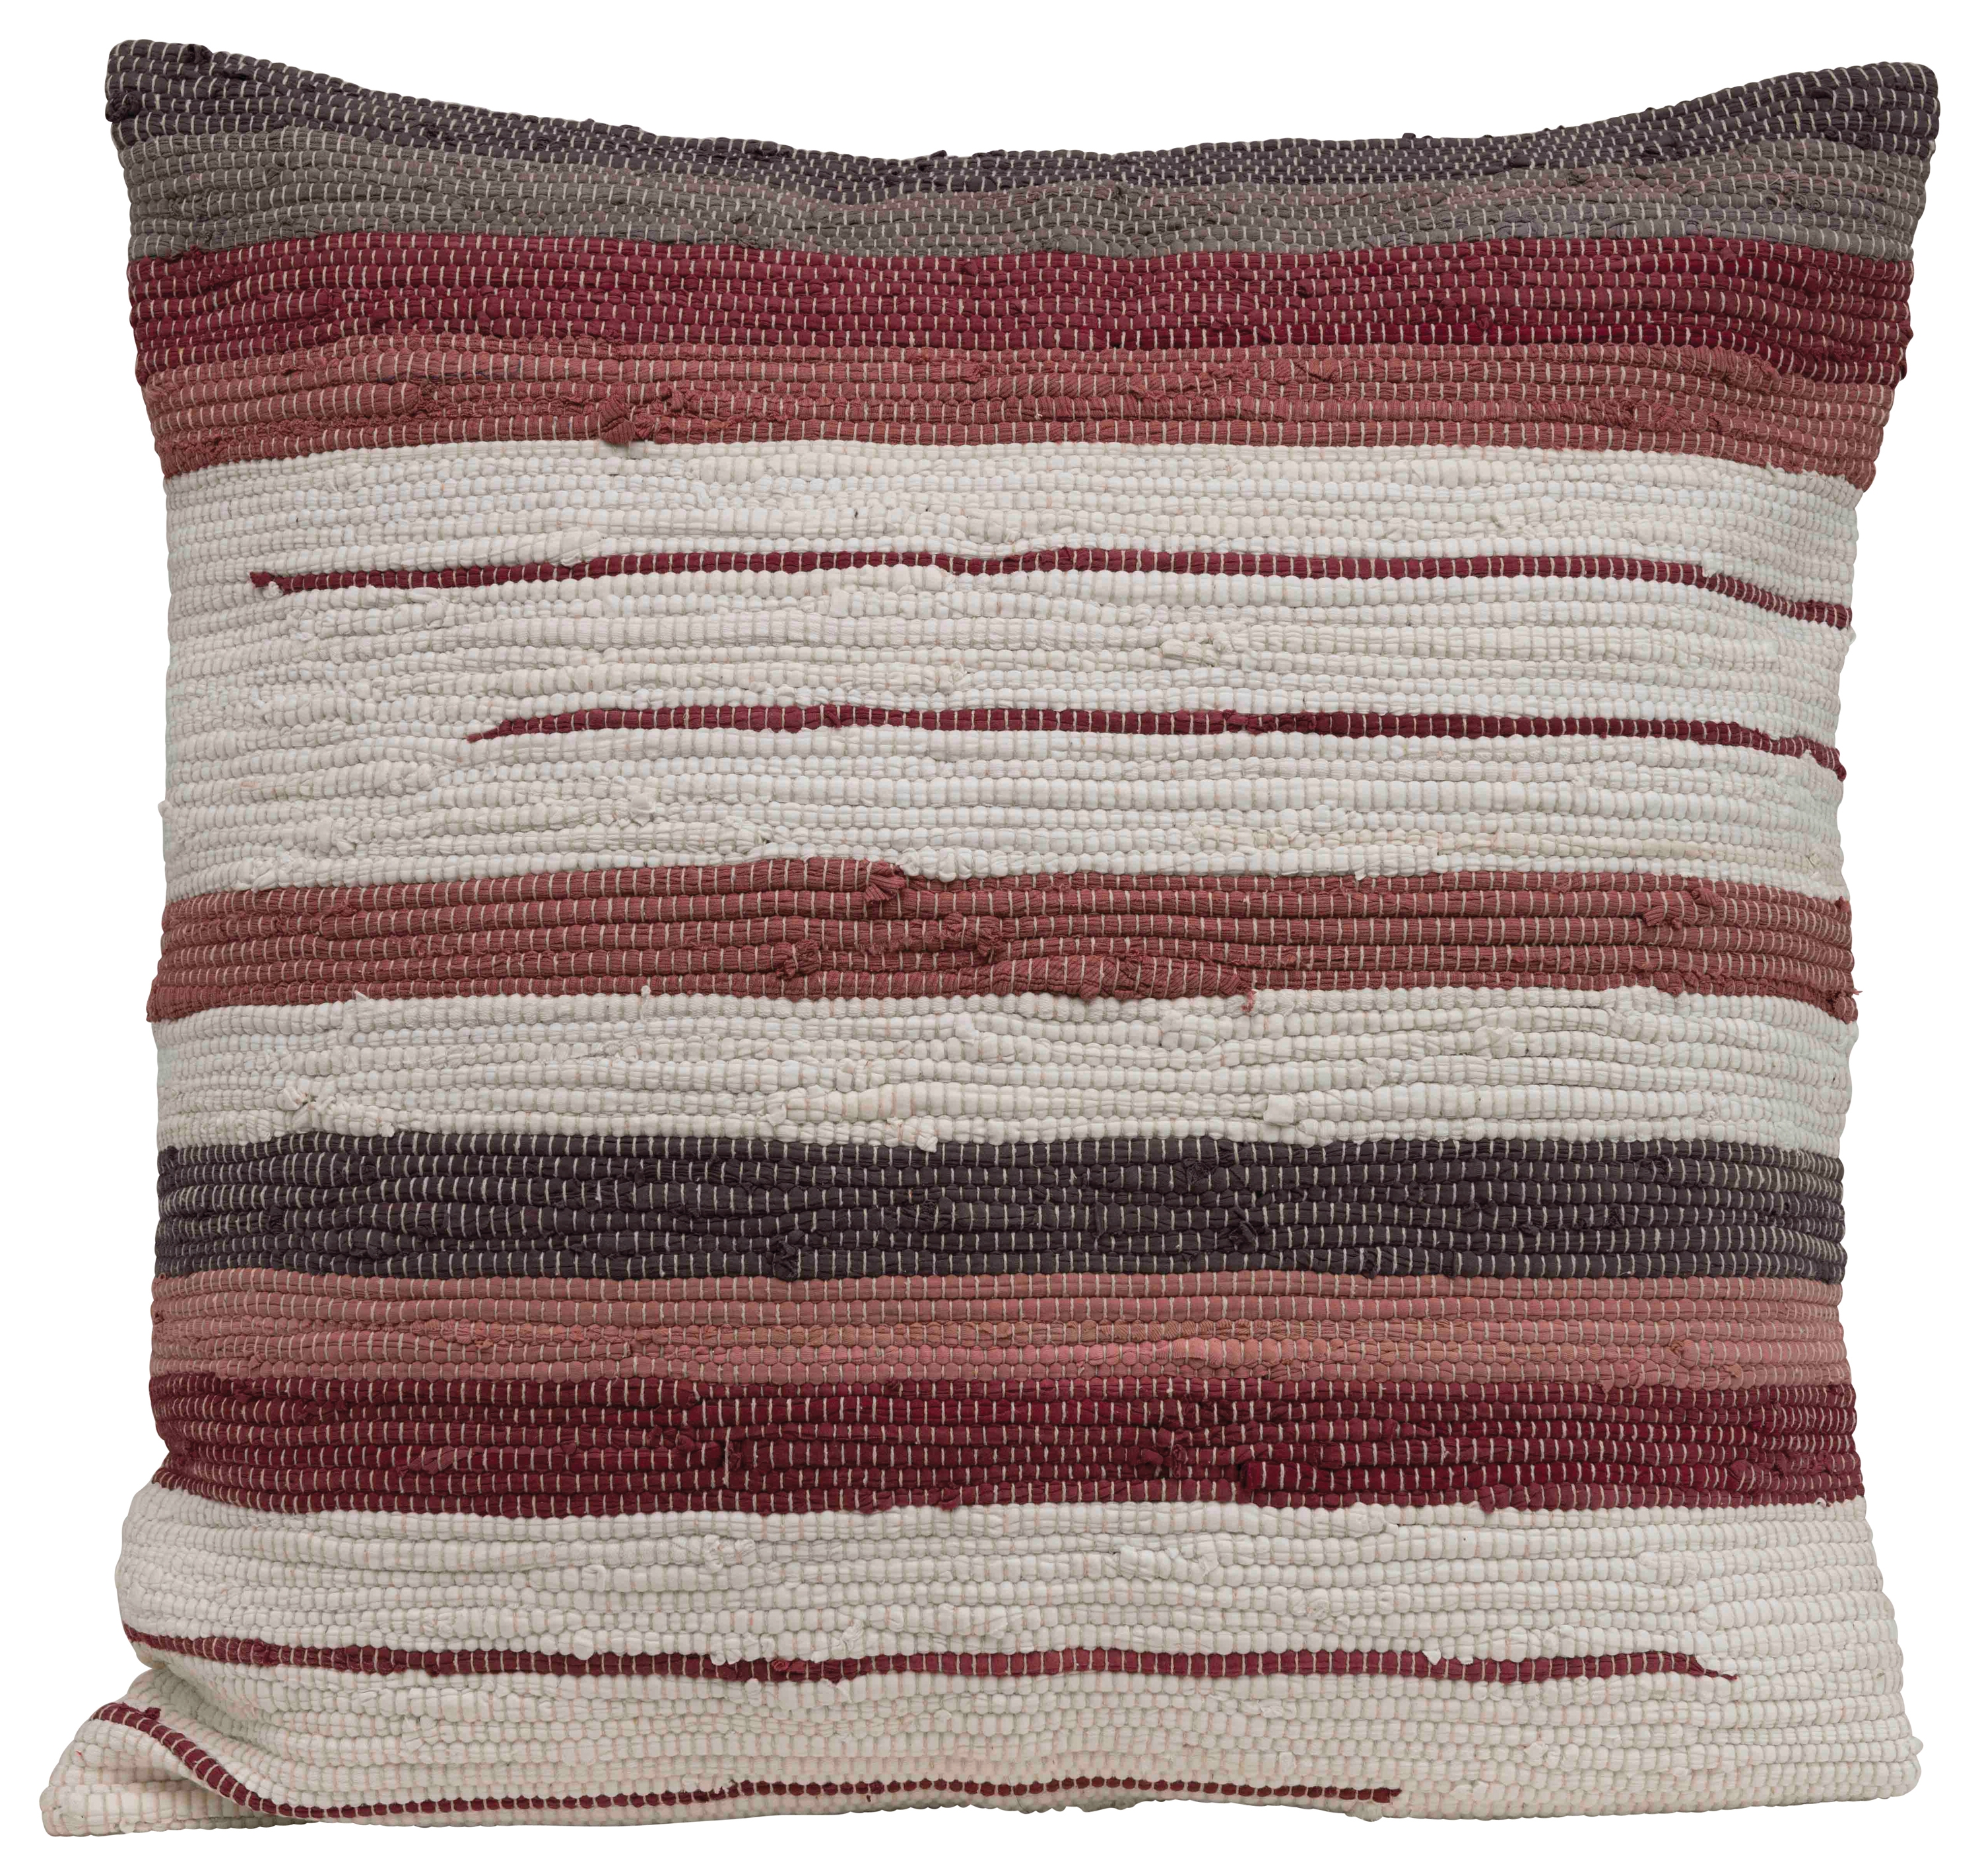 Square Striped Woven Cotton Blend Chindi Pillow - Image 0